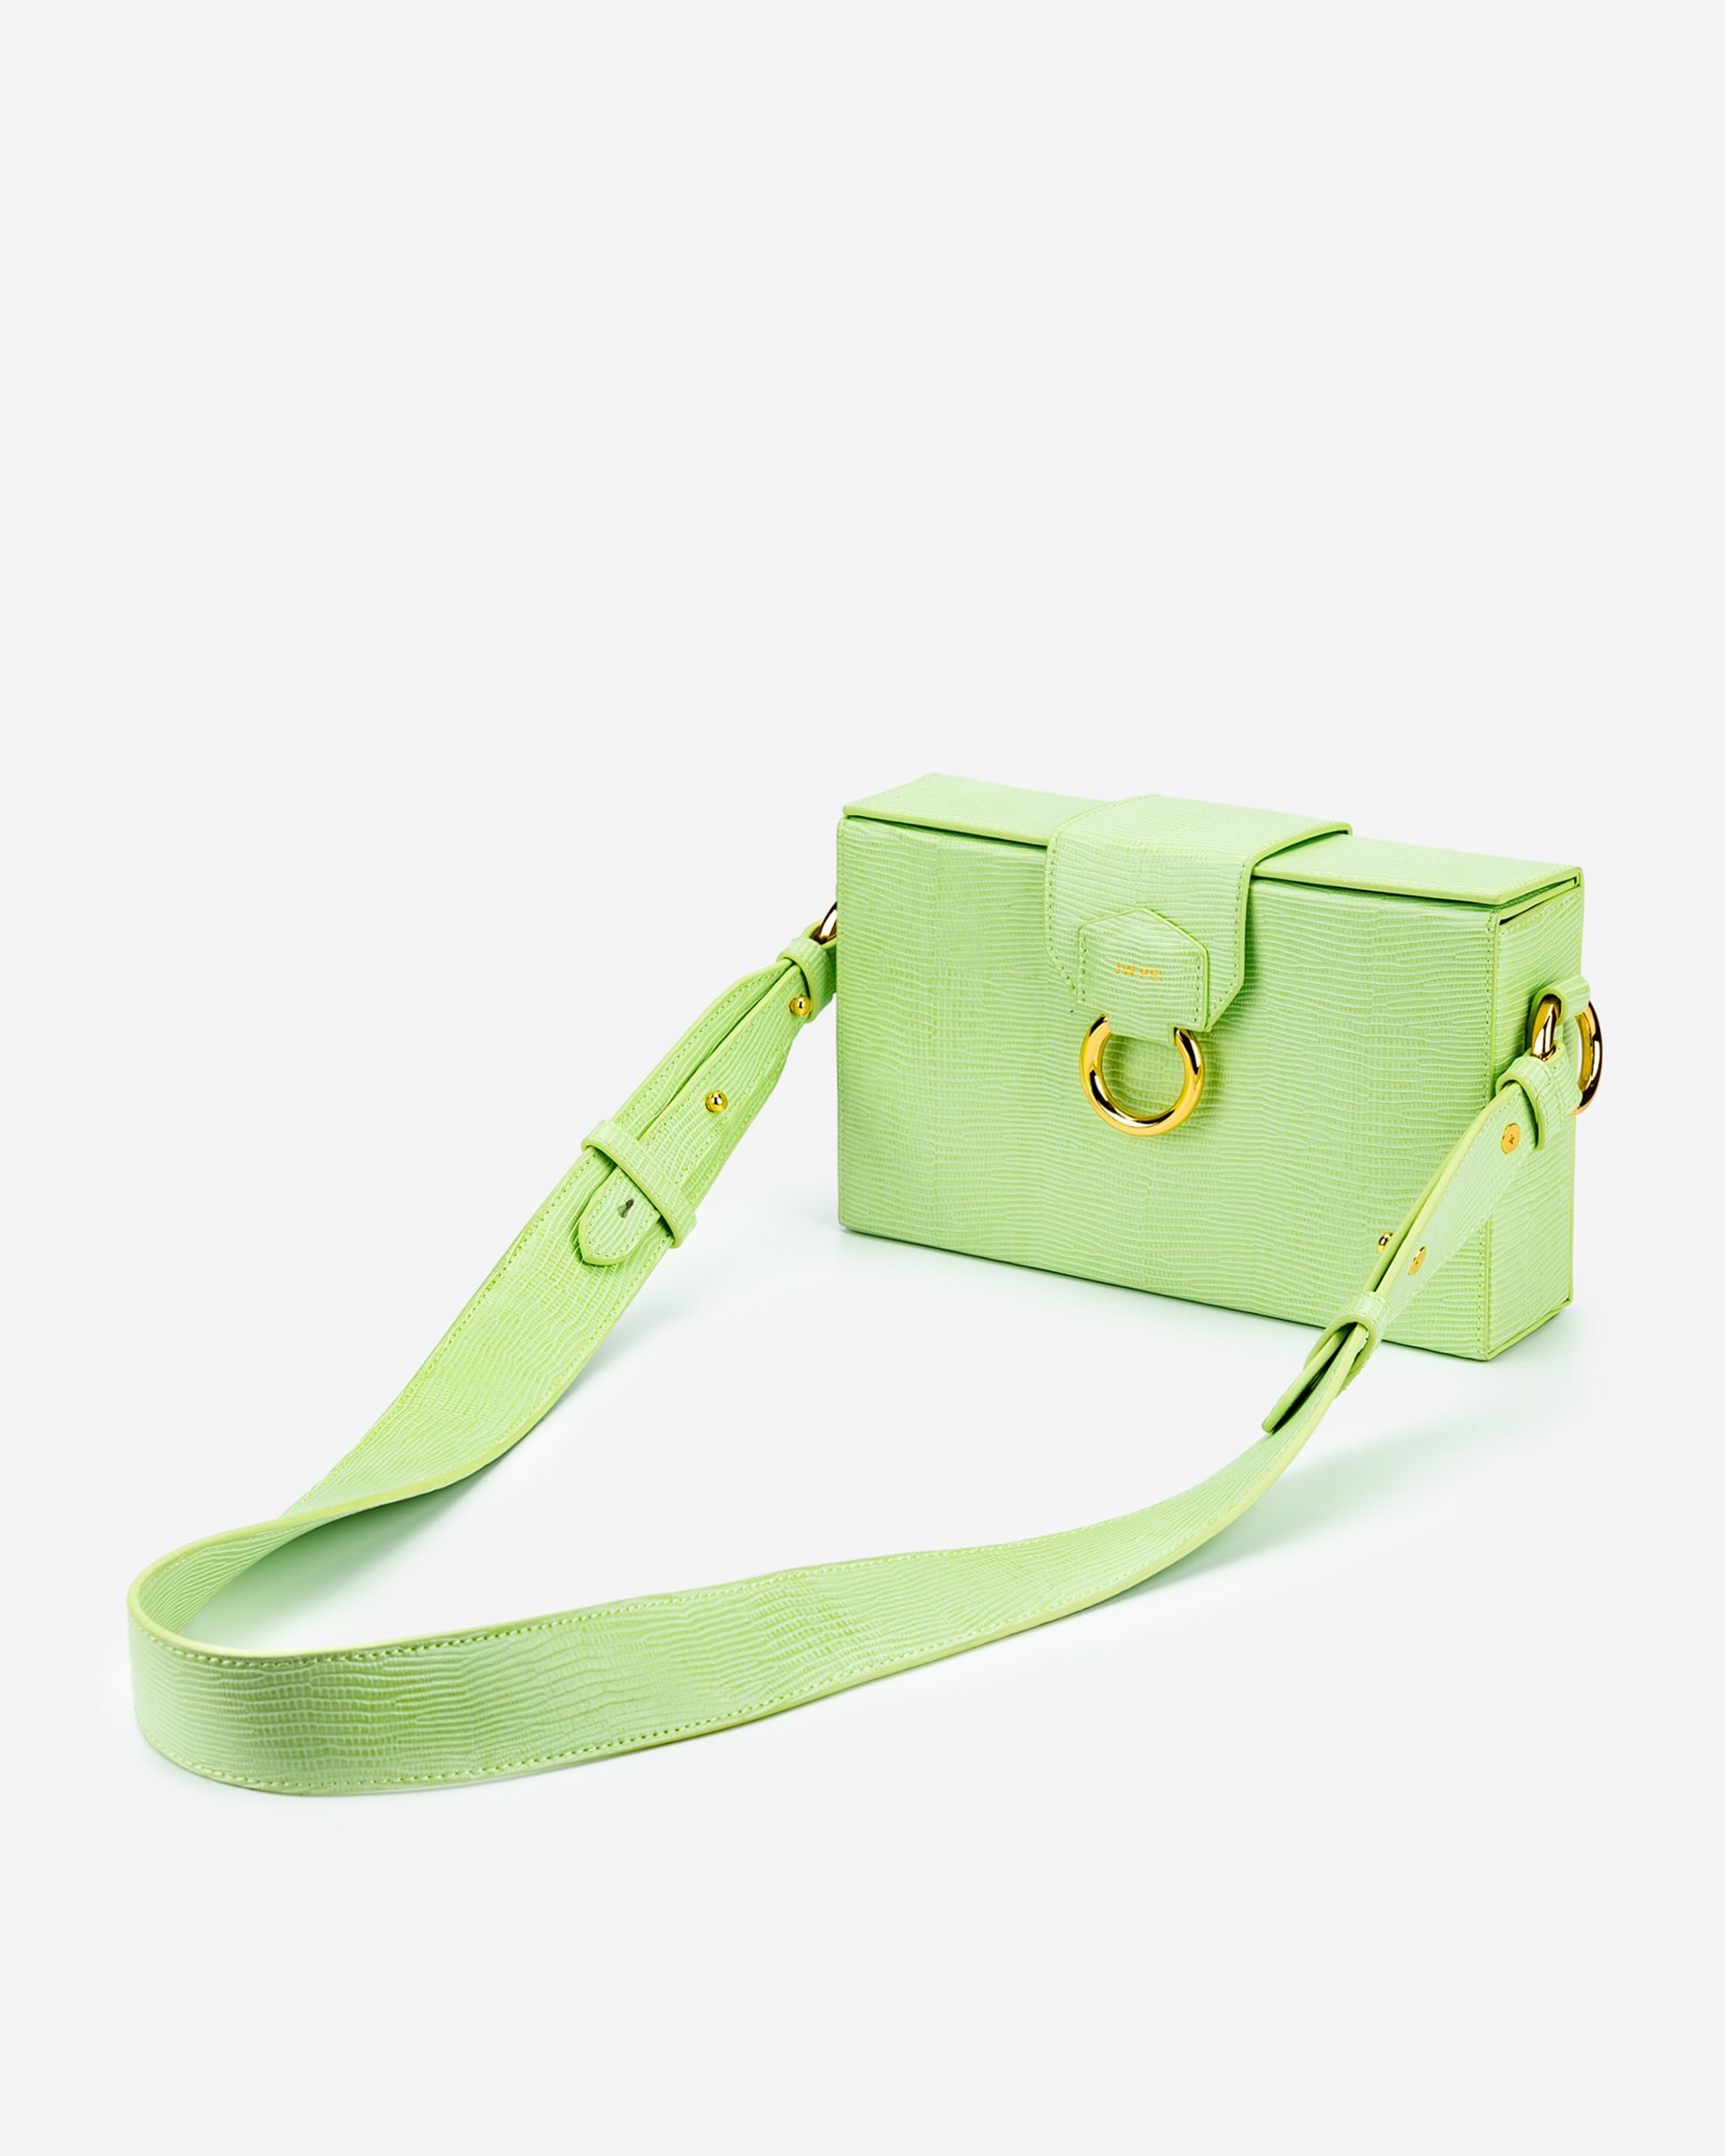 Grace 盒子包 - 青檸綠色蜥蜴紋